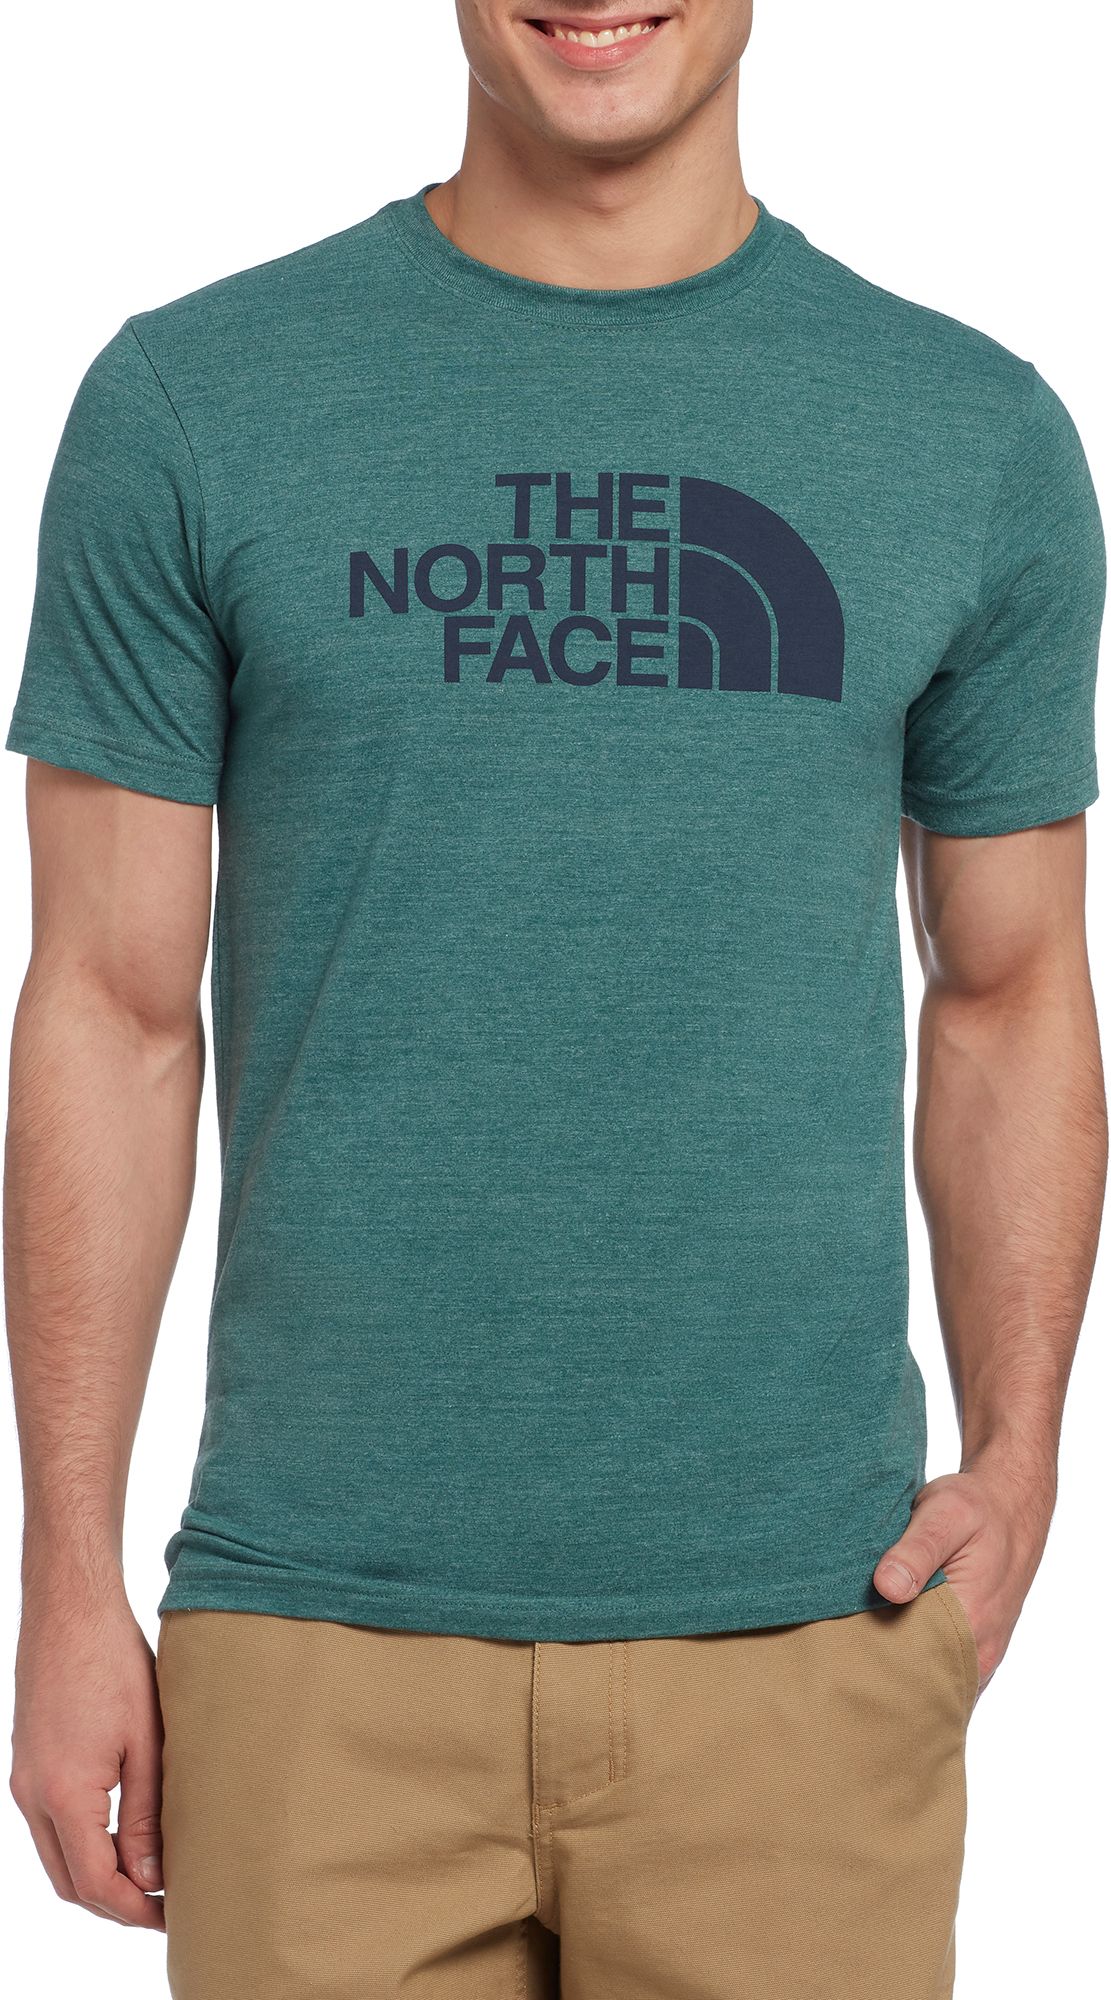 The North Face Men's Half Dome Tri-Blend T-Shirt - .97